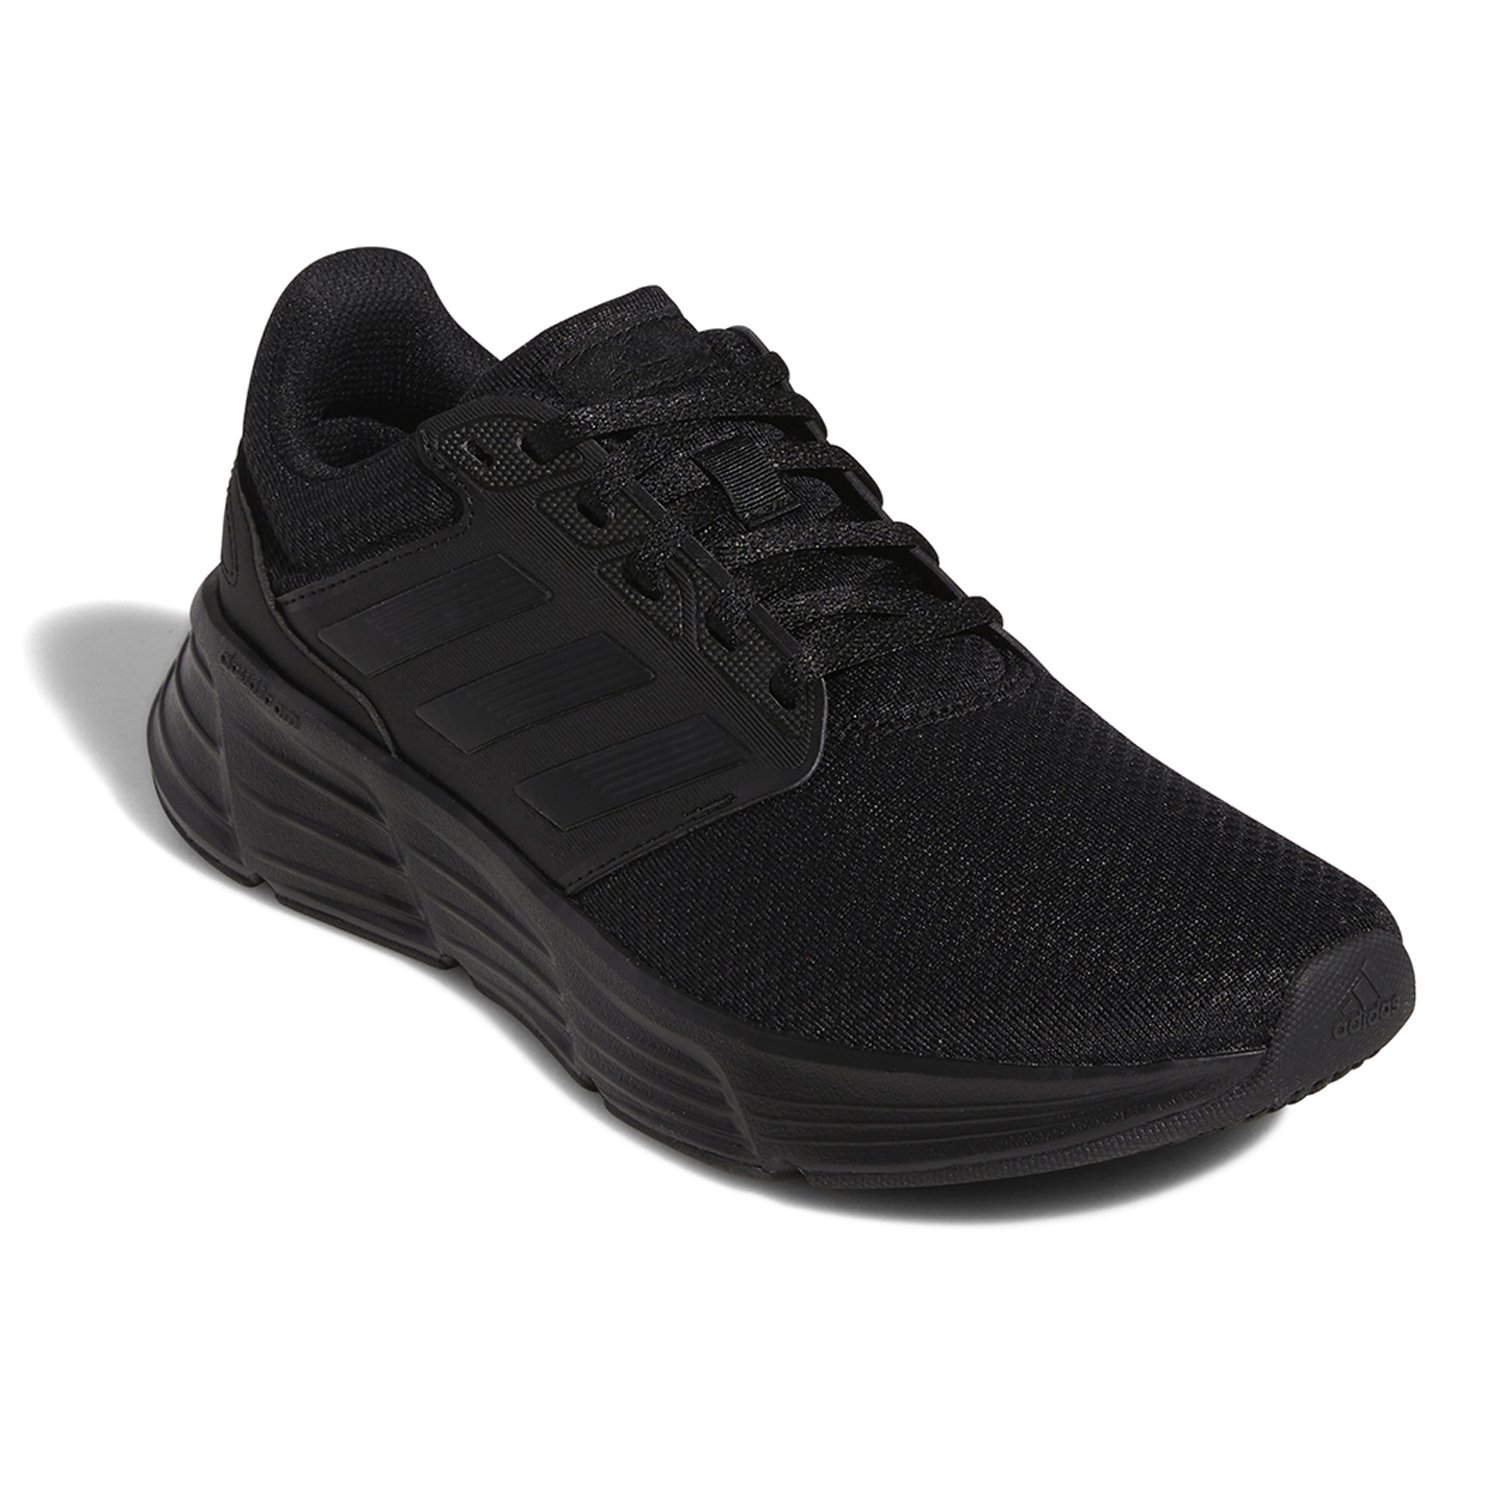 Adidas GALAXY 6 Kadın Koşu Ayakkabısı